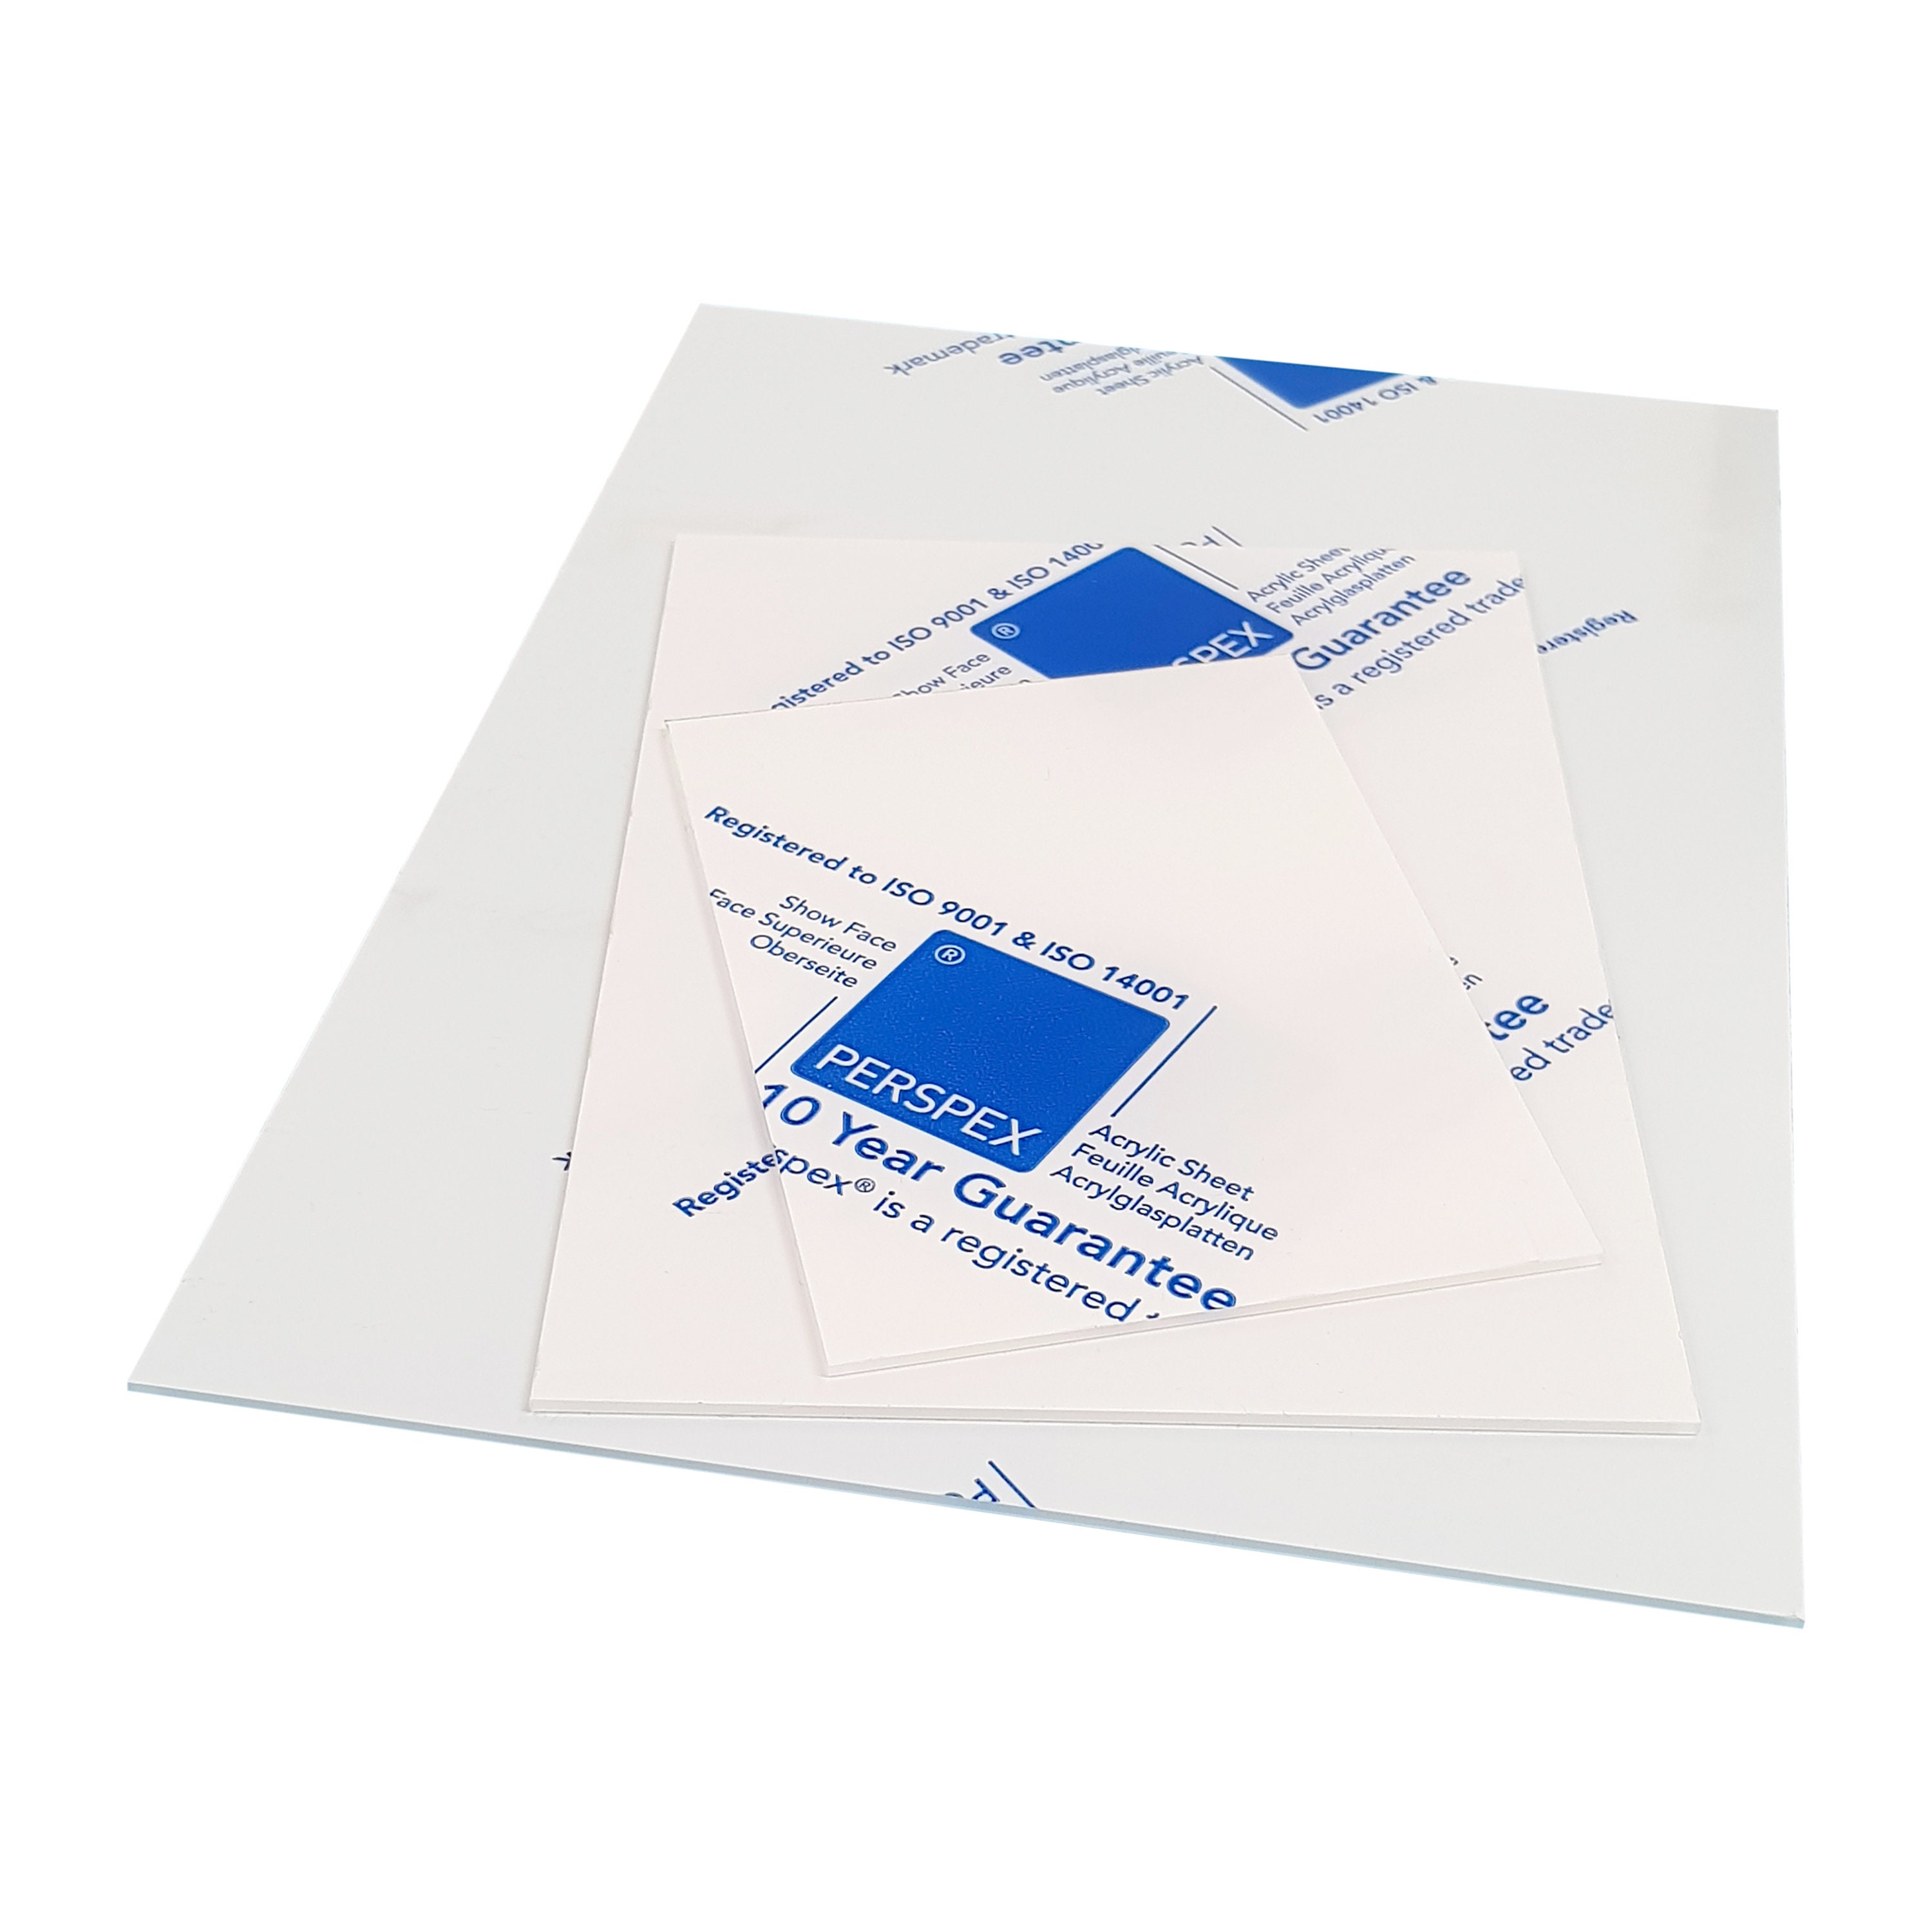 Perspex Acrylic Sheets Panel A3,A4,A5,A6,A8 [1mm 2mm 3mm 4mm 5mm 6mm 8mm]